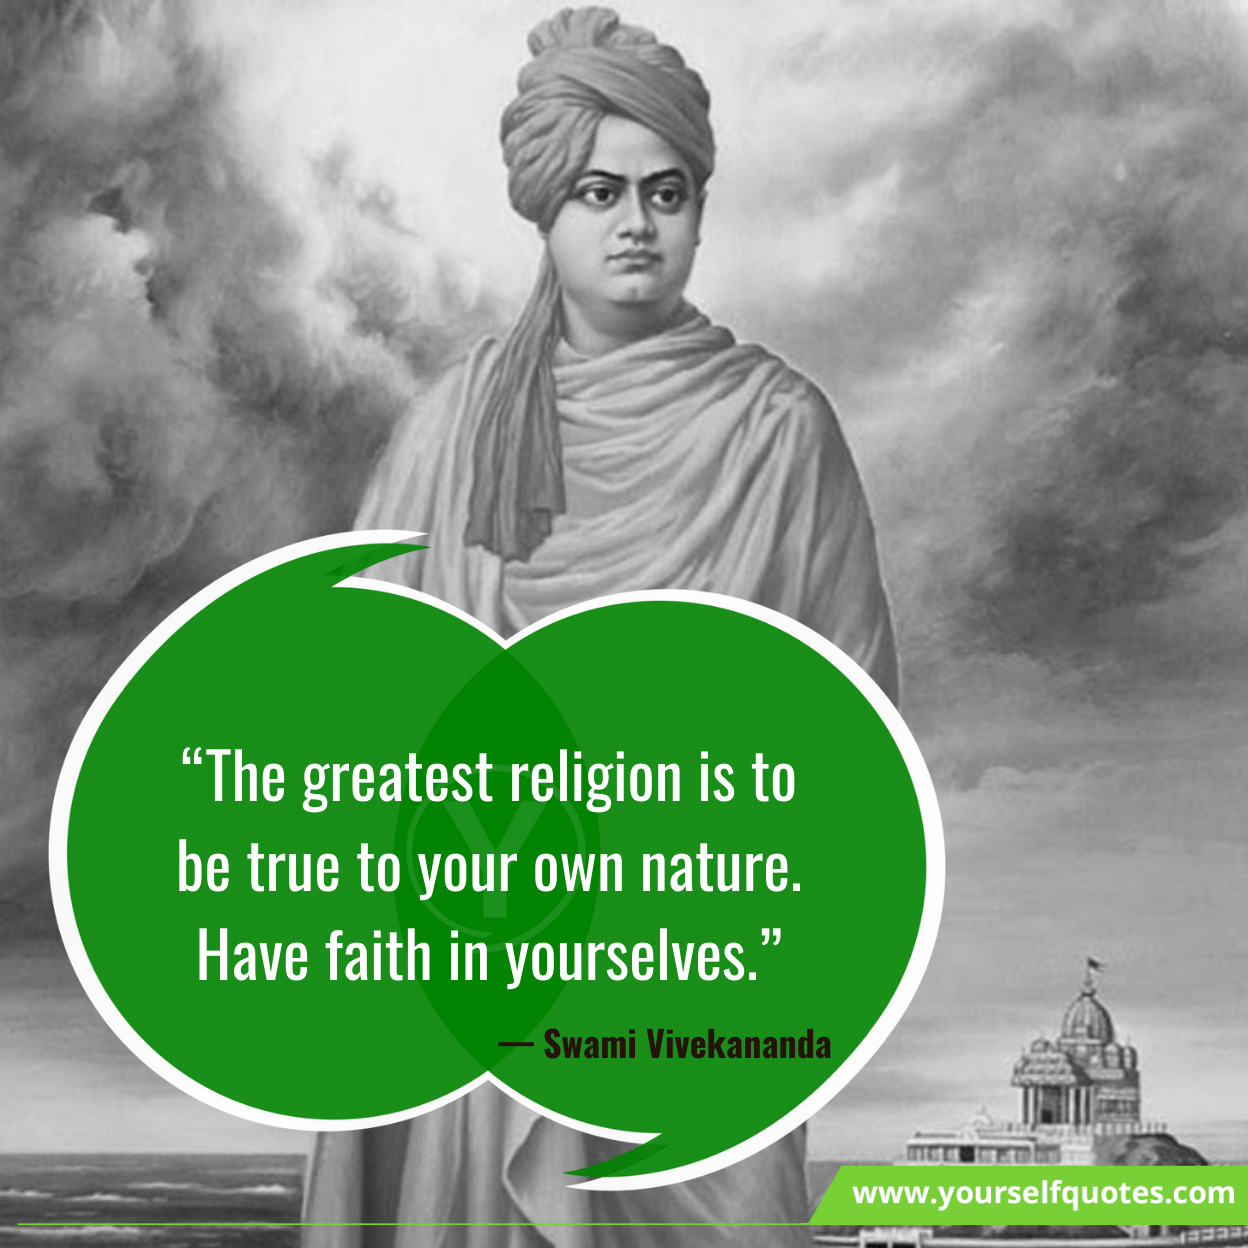 Swami Vivekananda Quotes About Religion